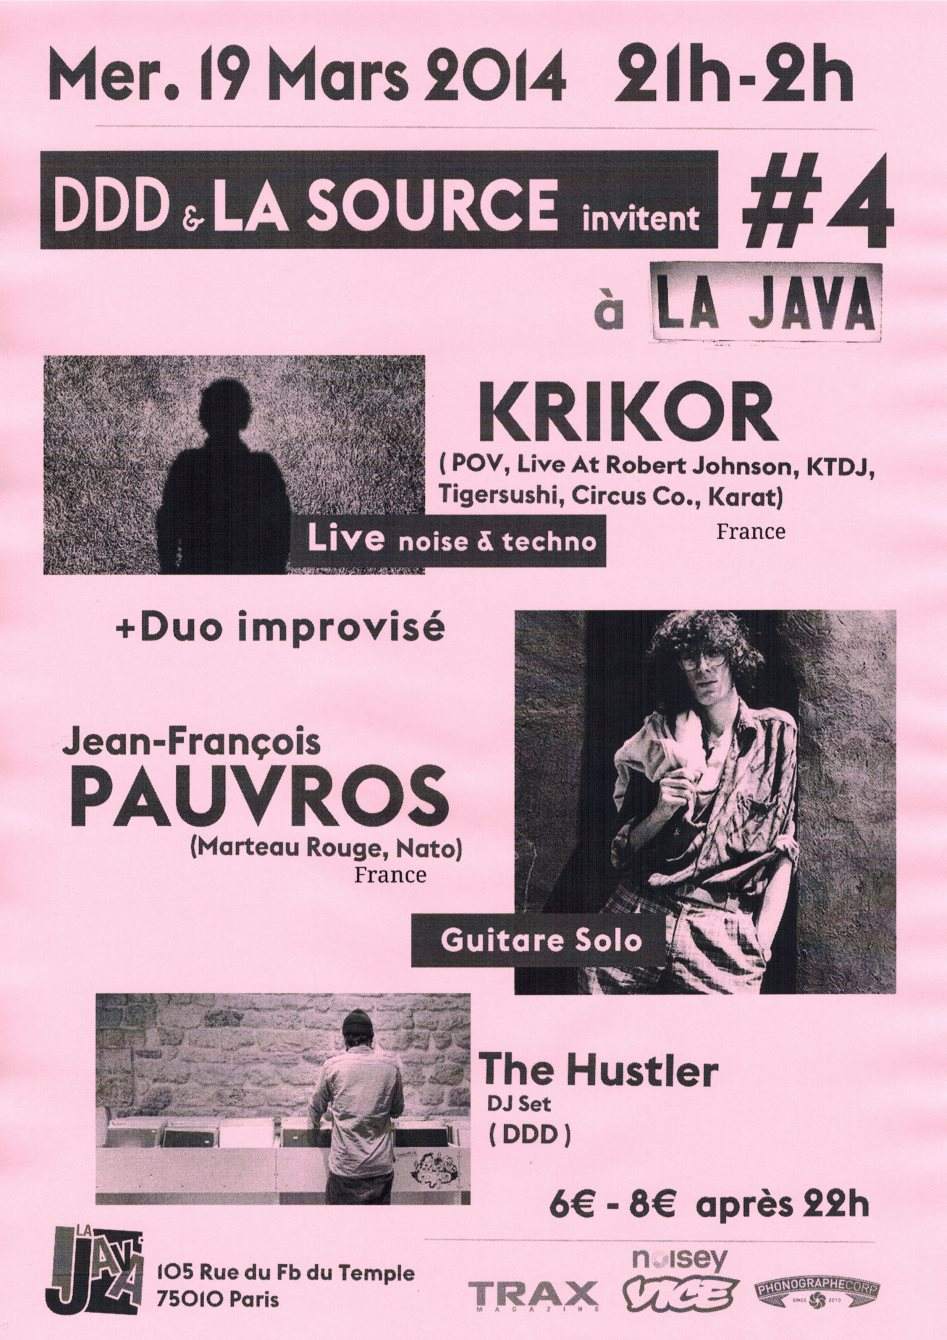 DDD & La Source Invitent 4 with Krikor, The Hustler, Jean-François Pauvros - フライヤー表